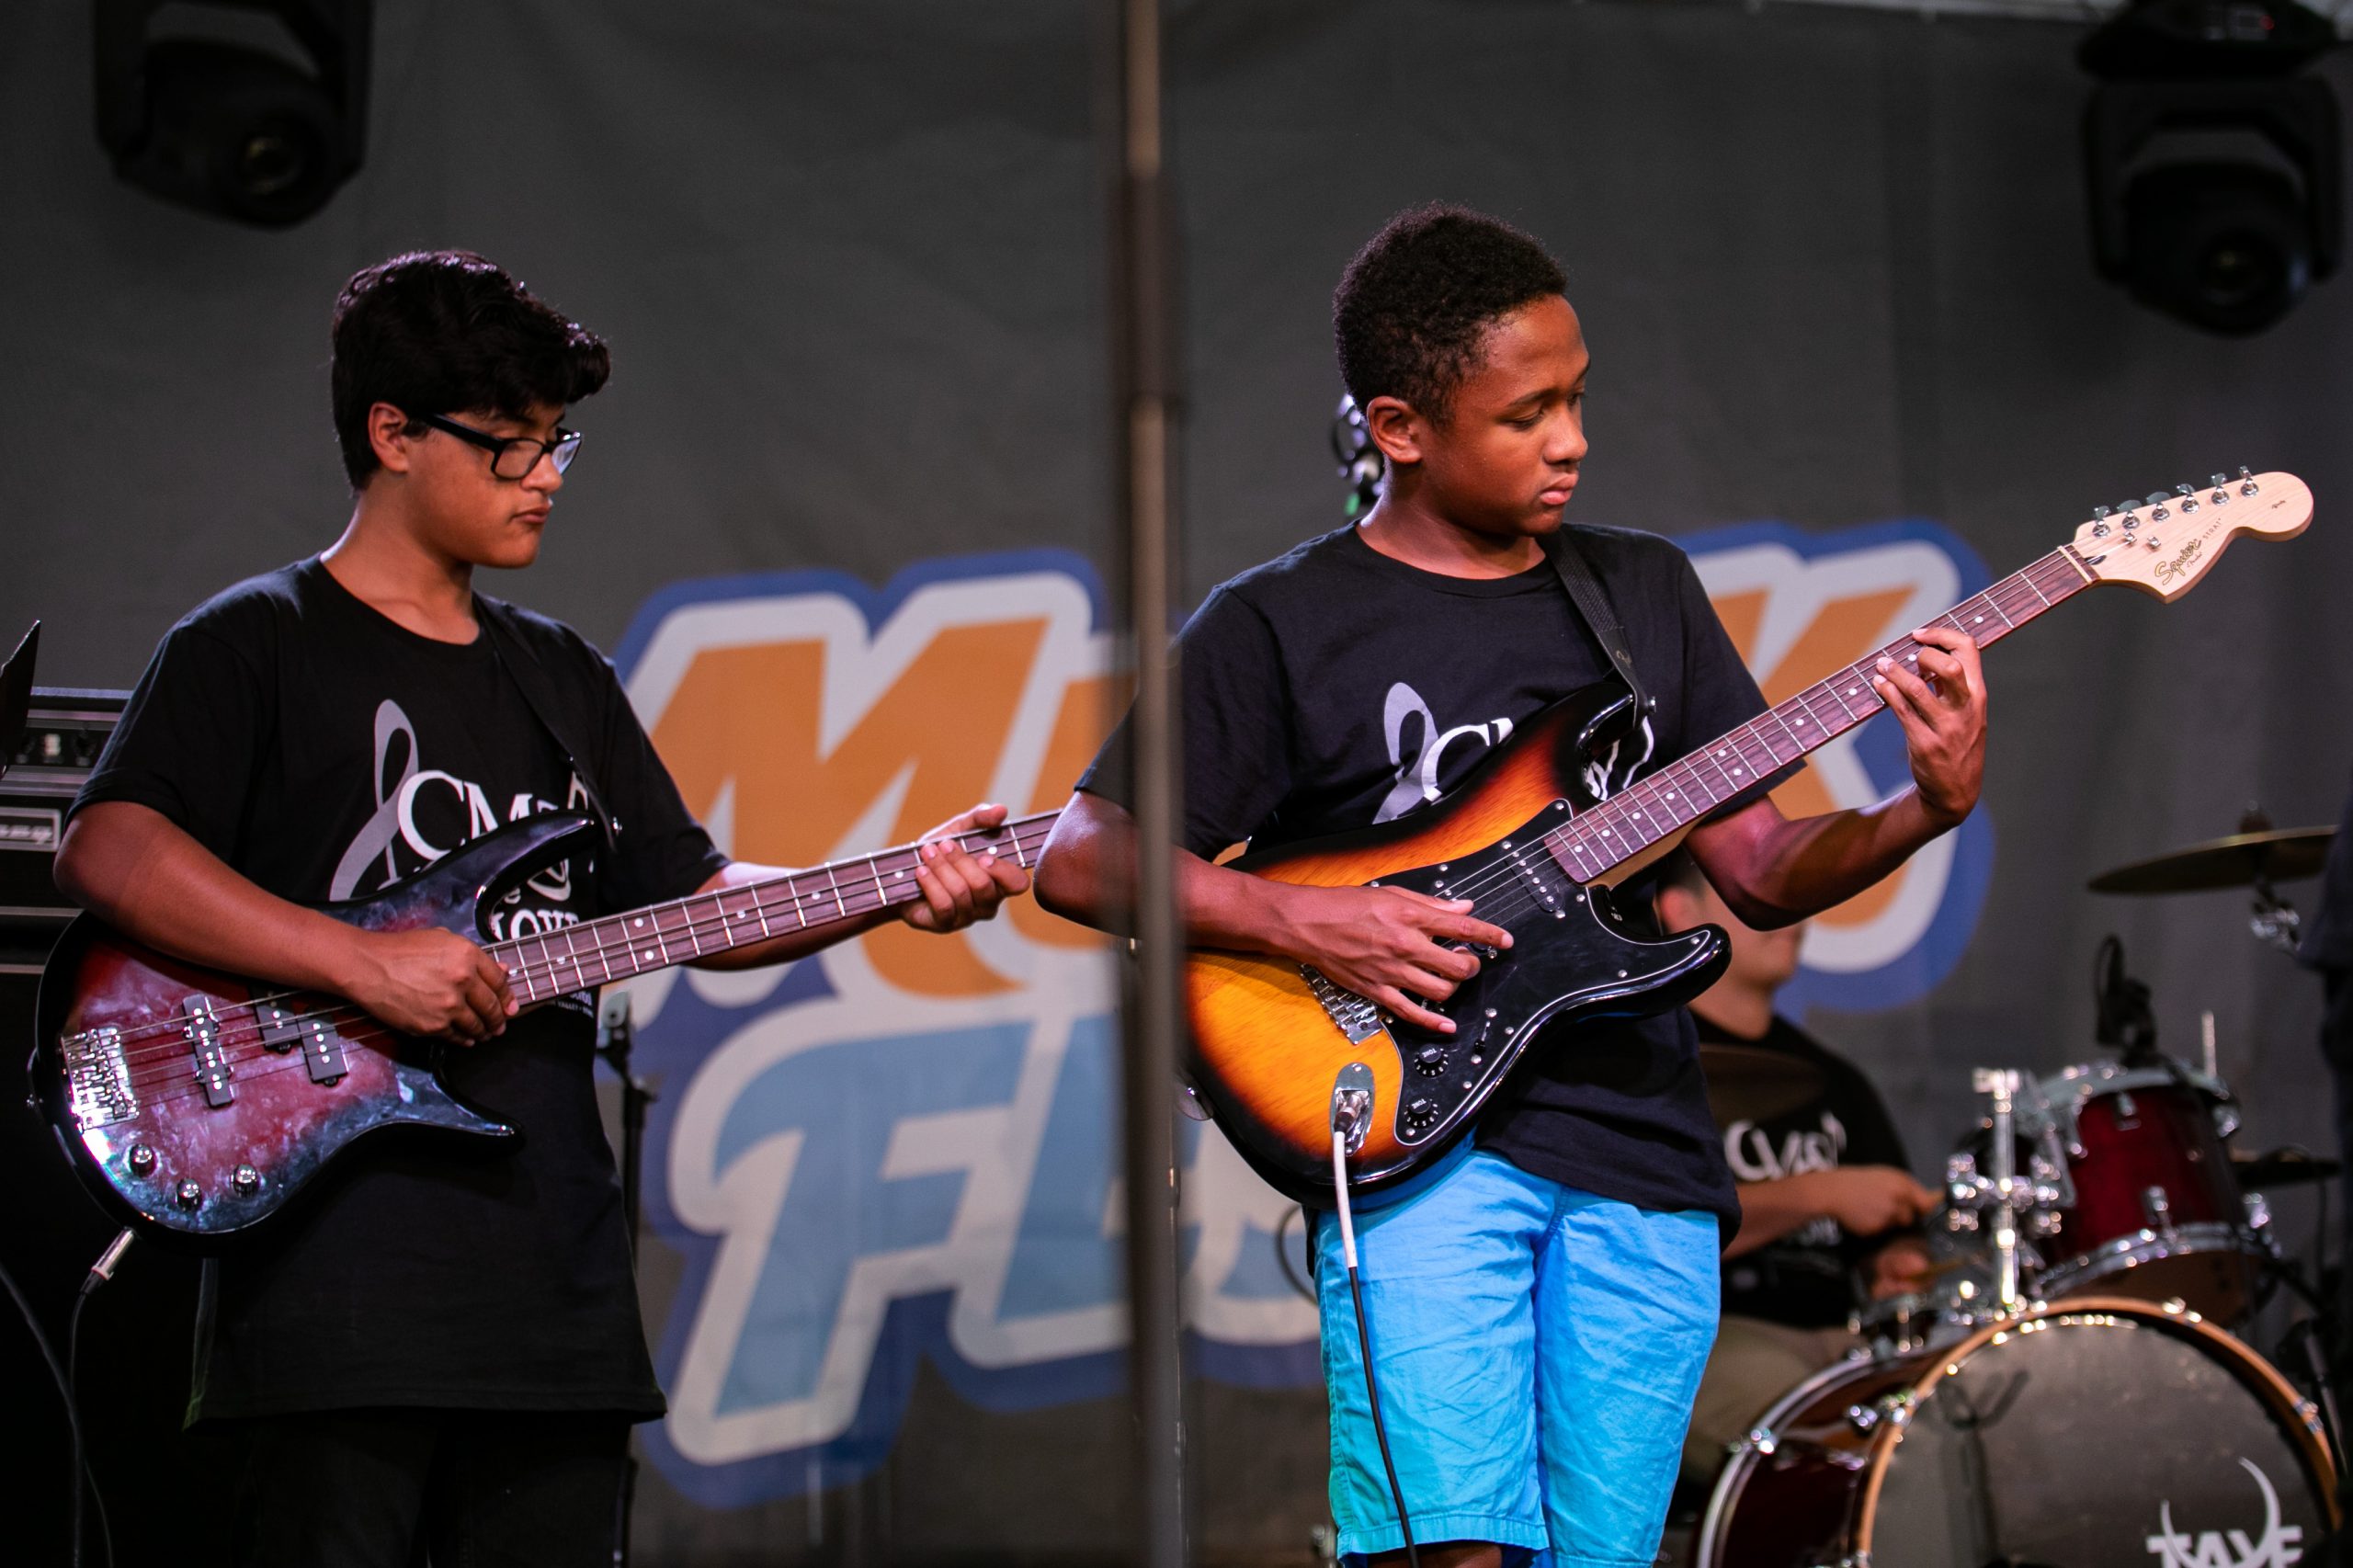 Community music school guitar students perform at musikfest